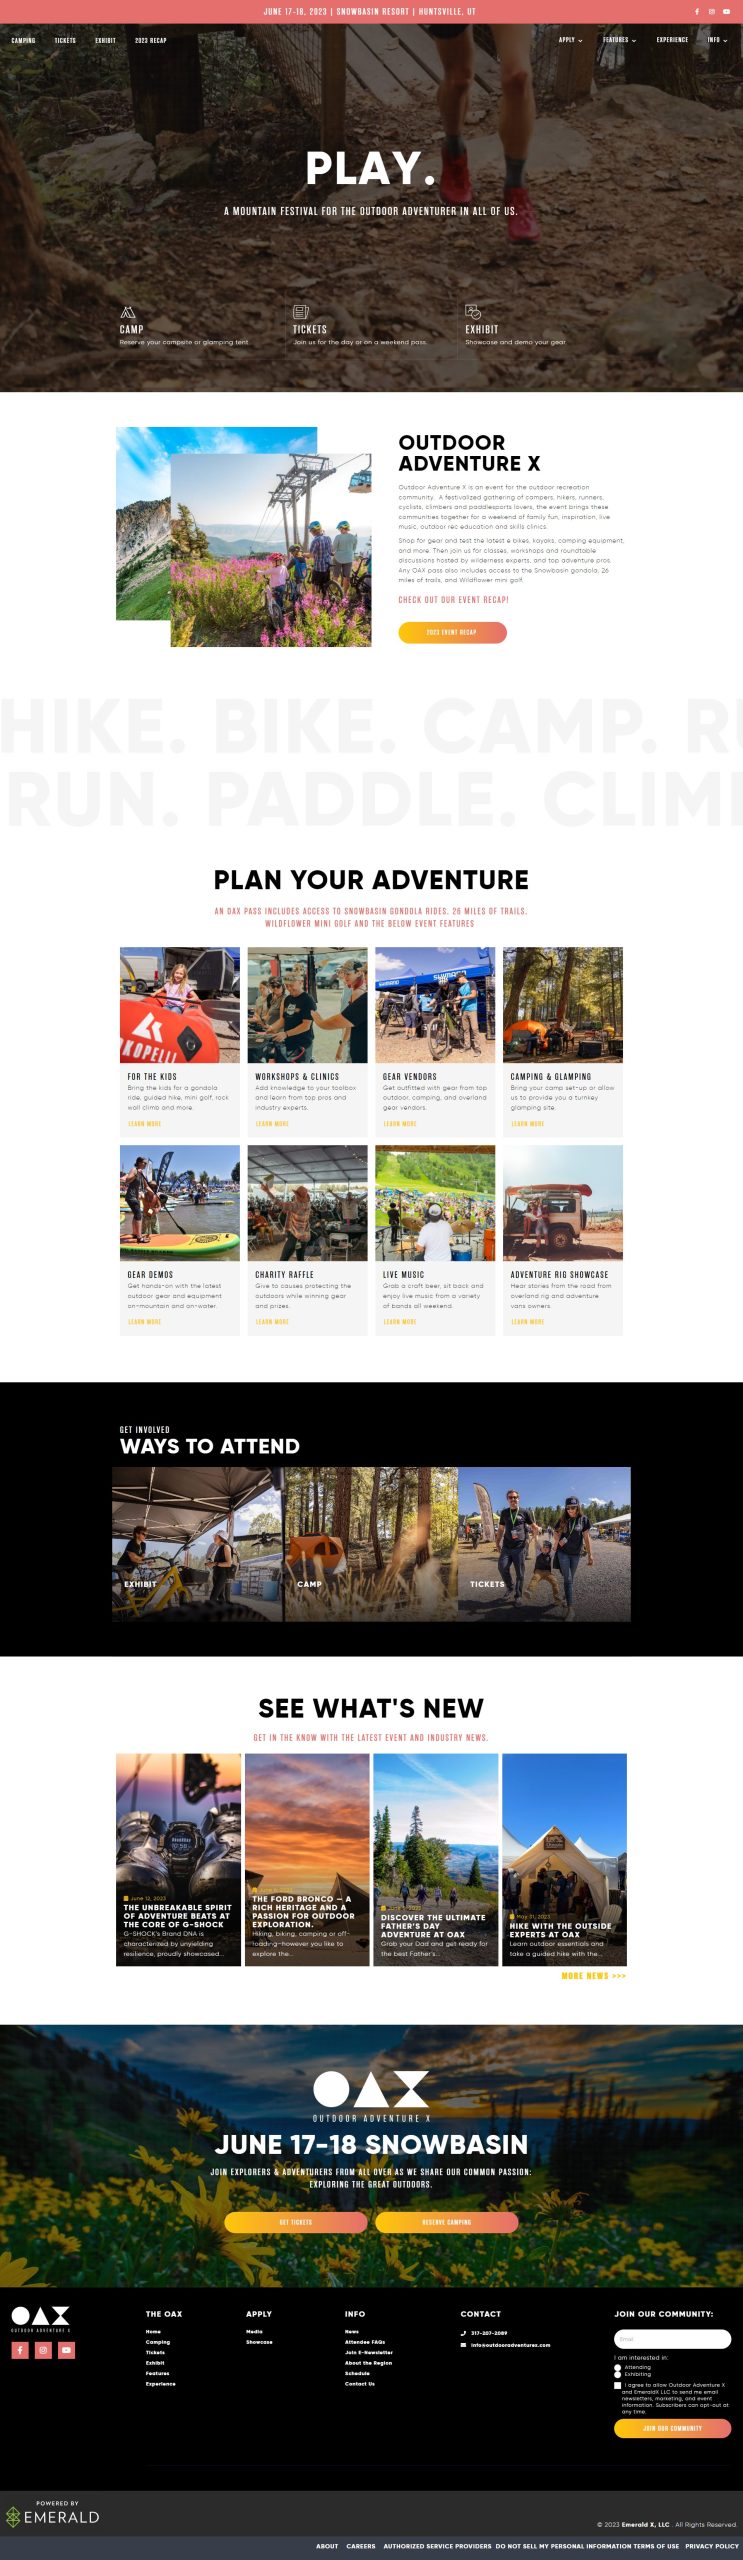 OAX outdoor adventure website design custom development